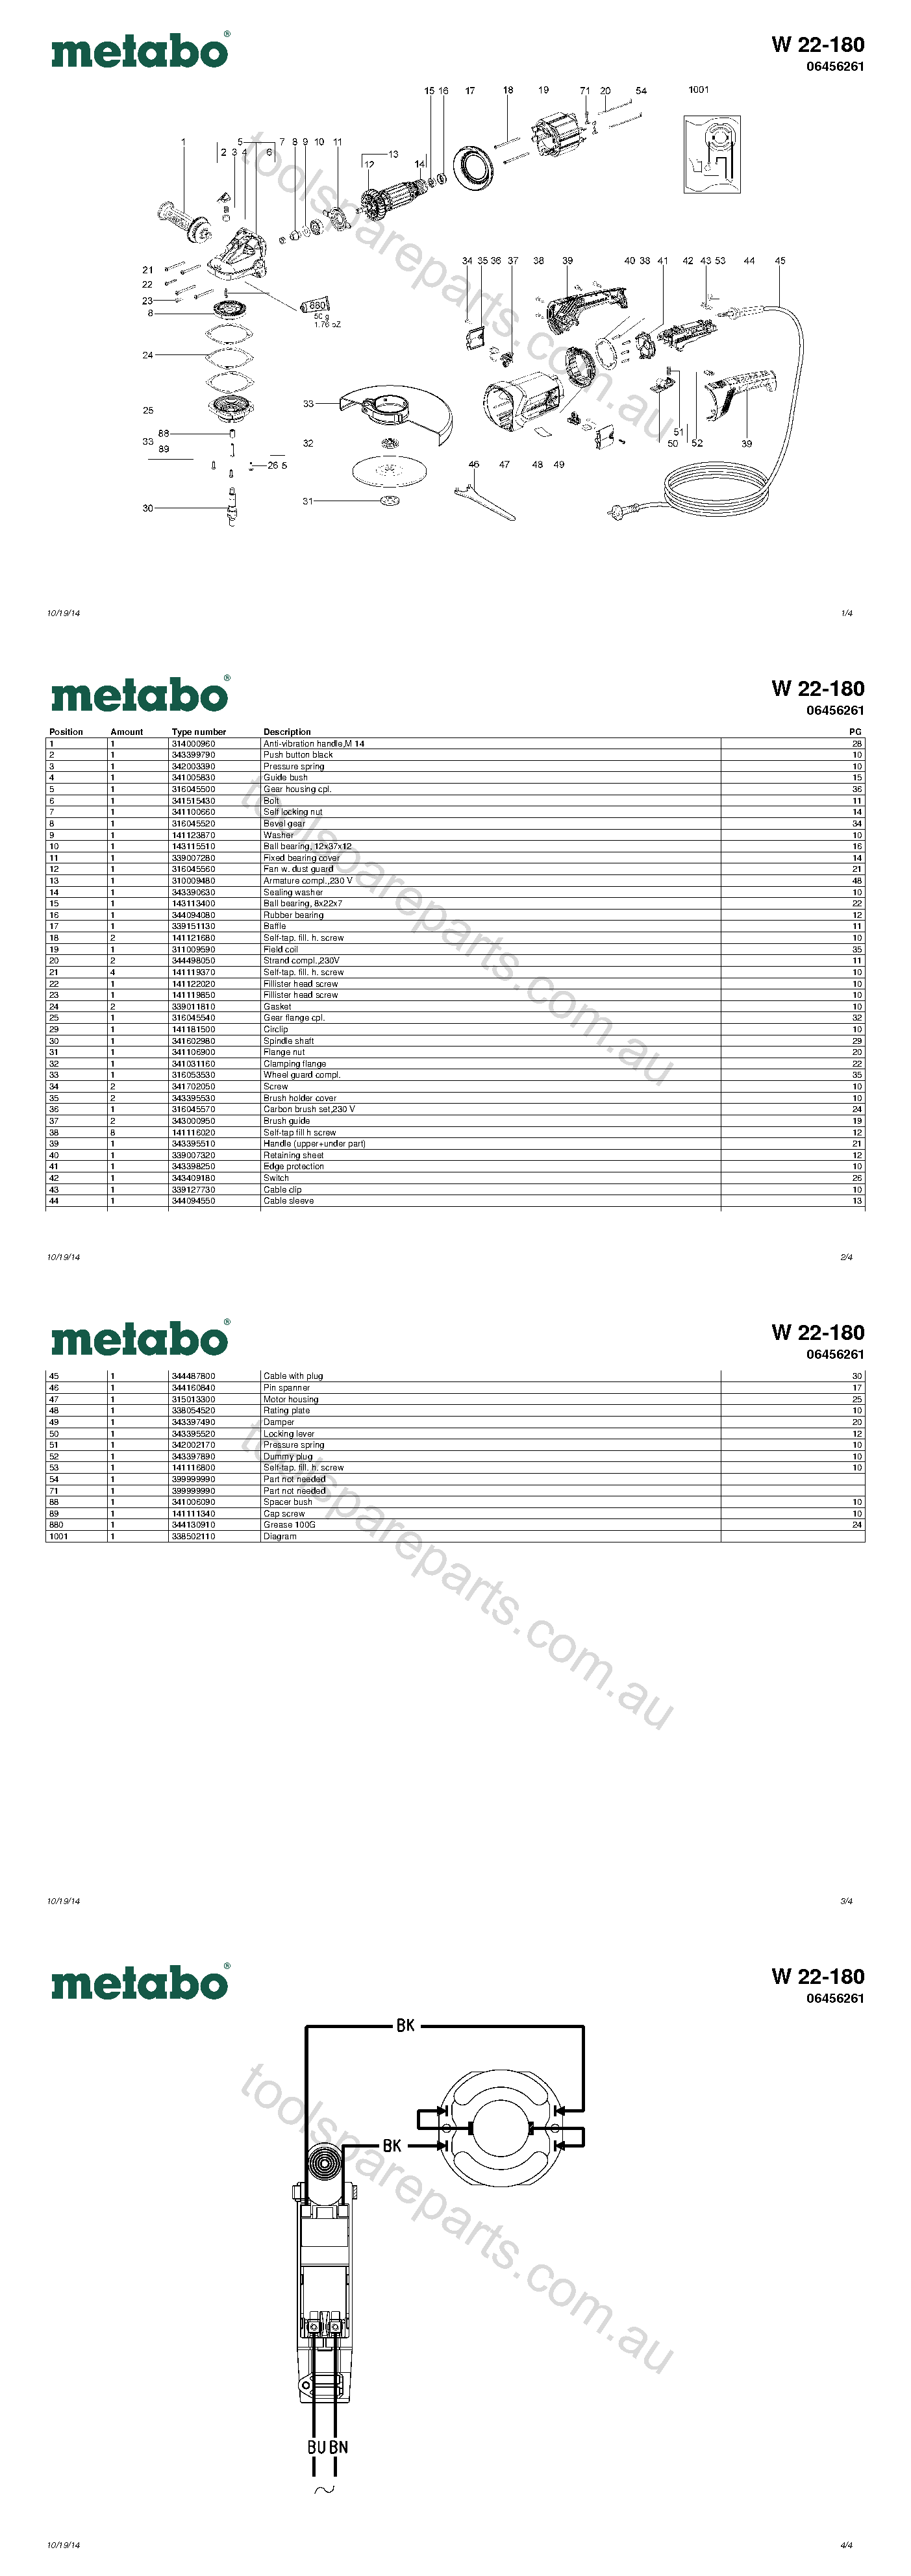 Metabo W 22-180 06456261  Diagram 1